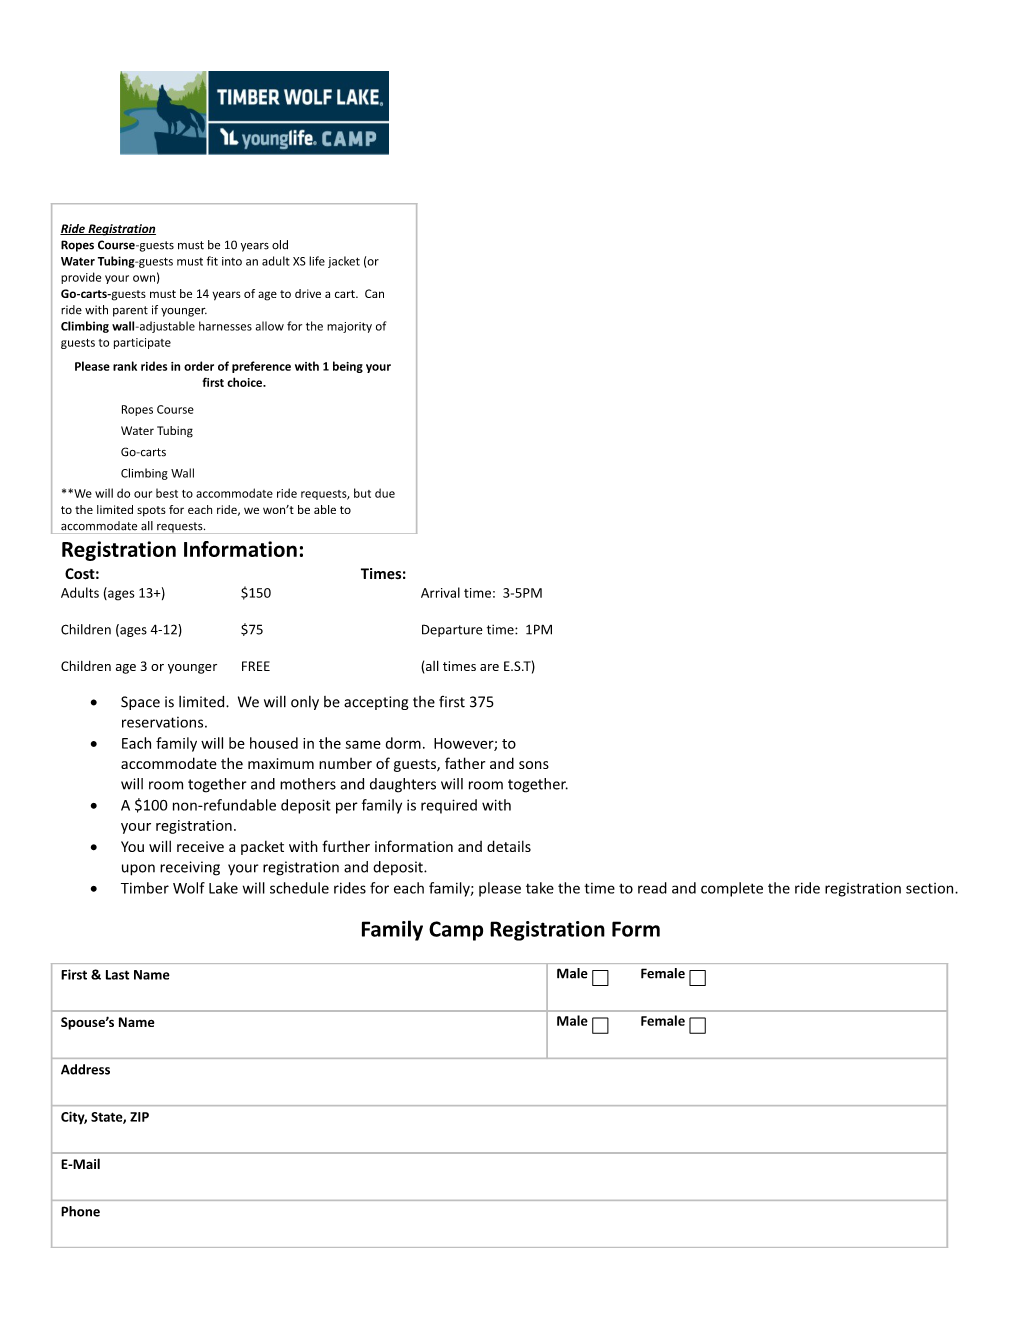 Registration Information s5